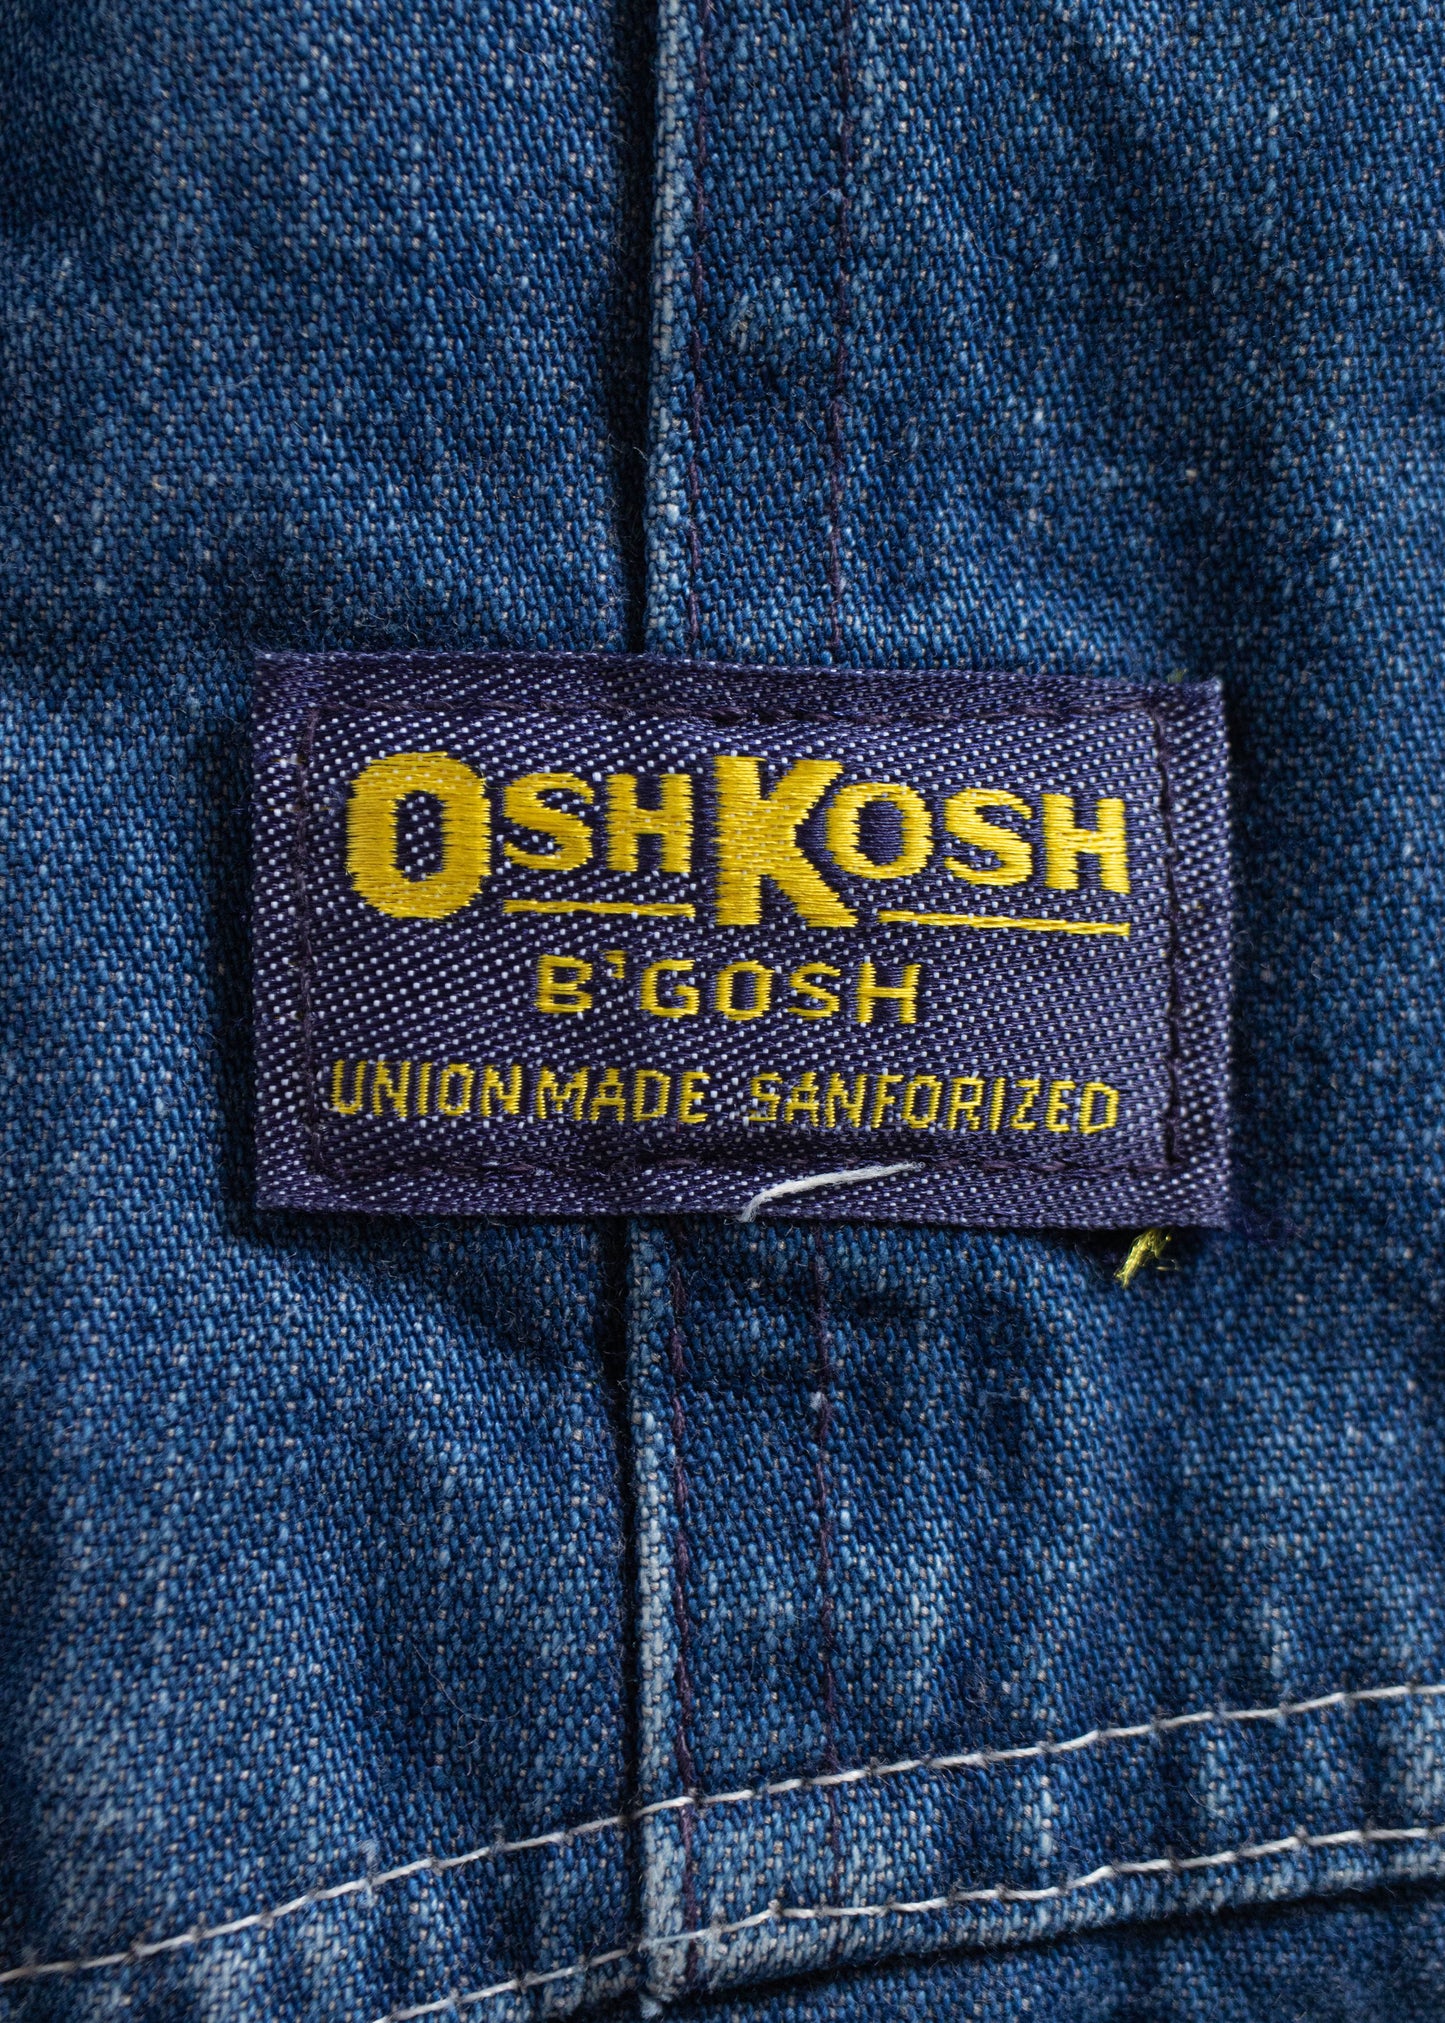 Vintage 1980s OshKosh B'Gosh Denim Overalls Size L/XL